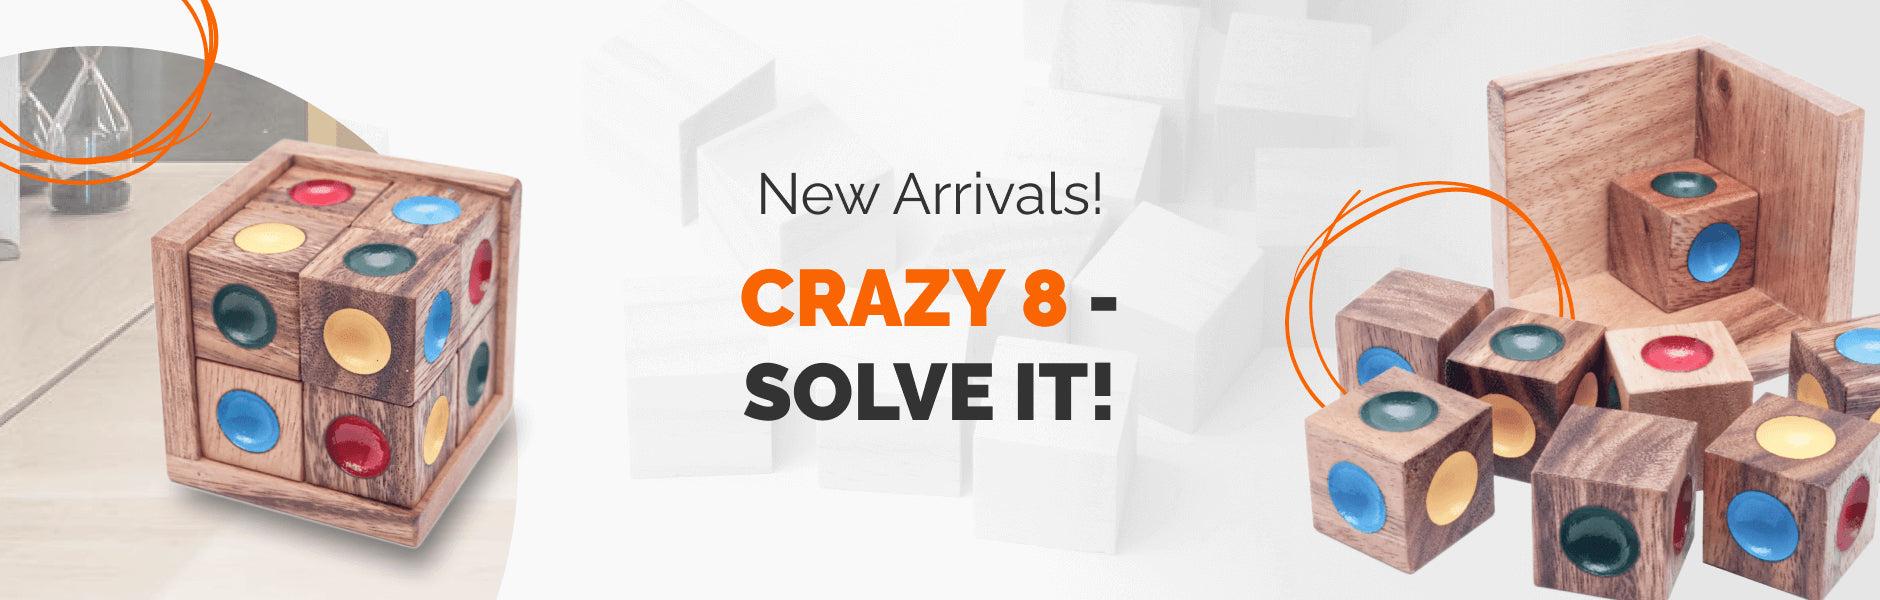 New SolveIt Arrivals, Crazy 8 - Solve It!